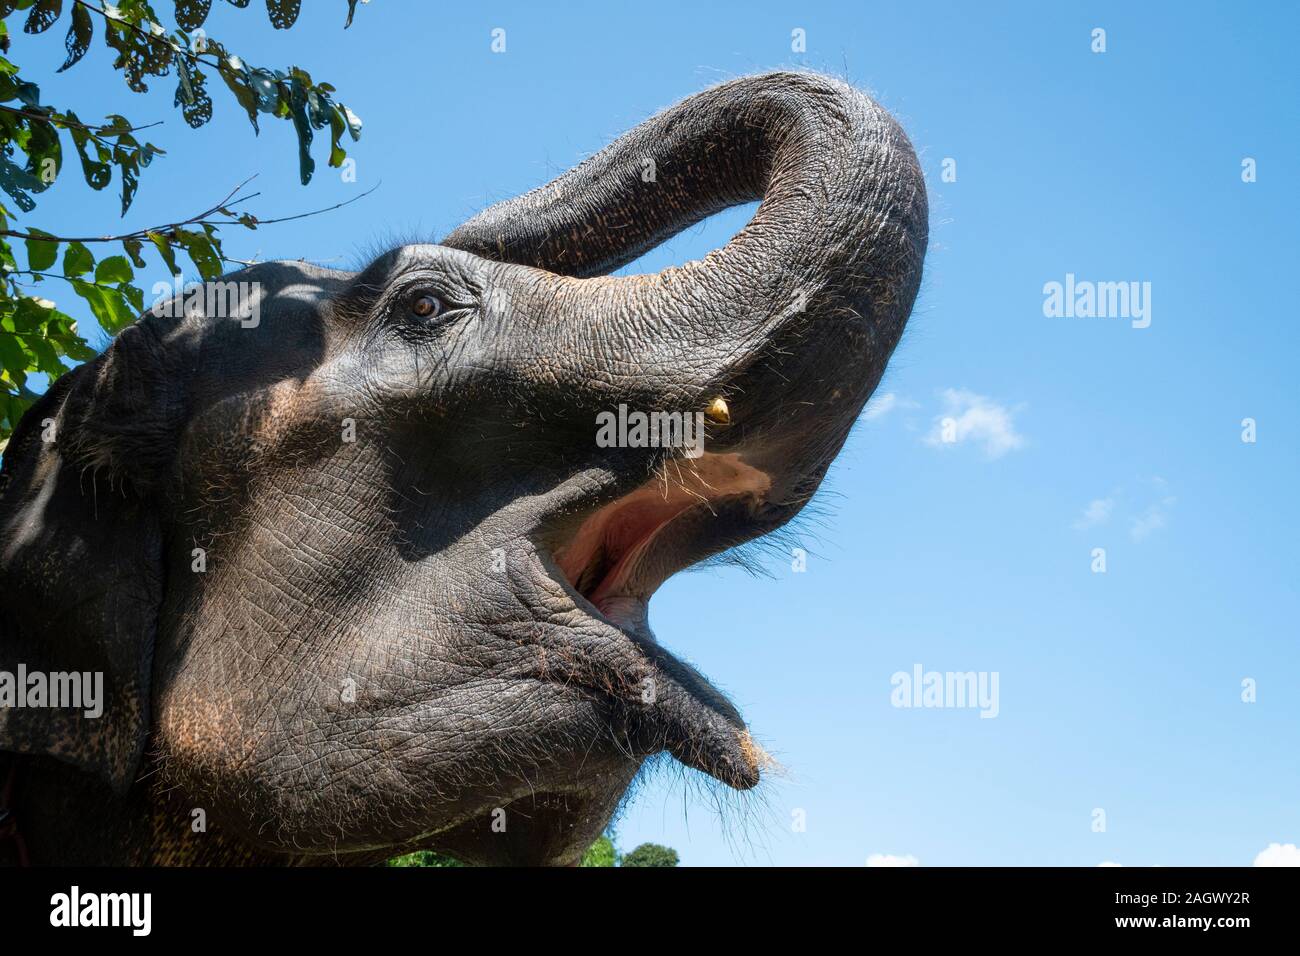 Elephants head with trunk raised, near Chiang Mai, Thailand Stock Photo